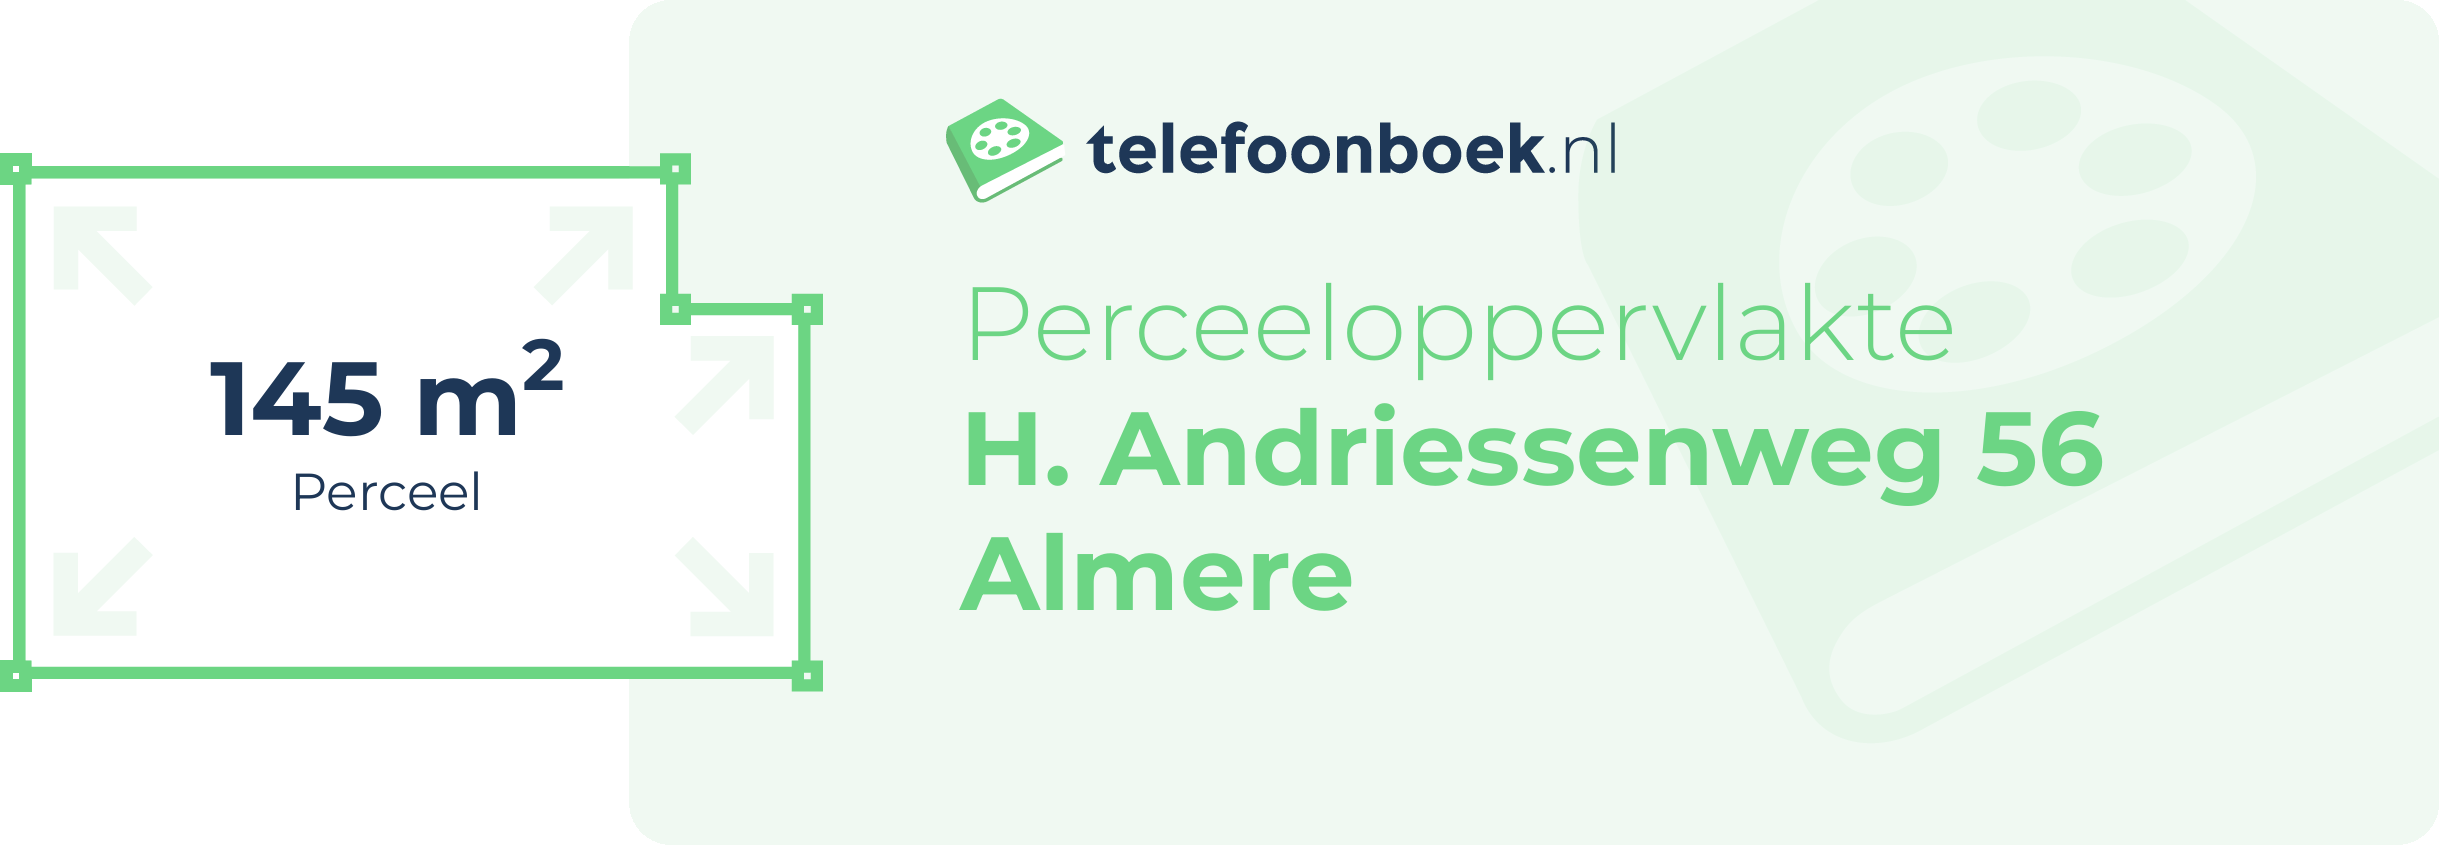 Perceeloppervlakte H. Andriessenweg 56 Almere